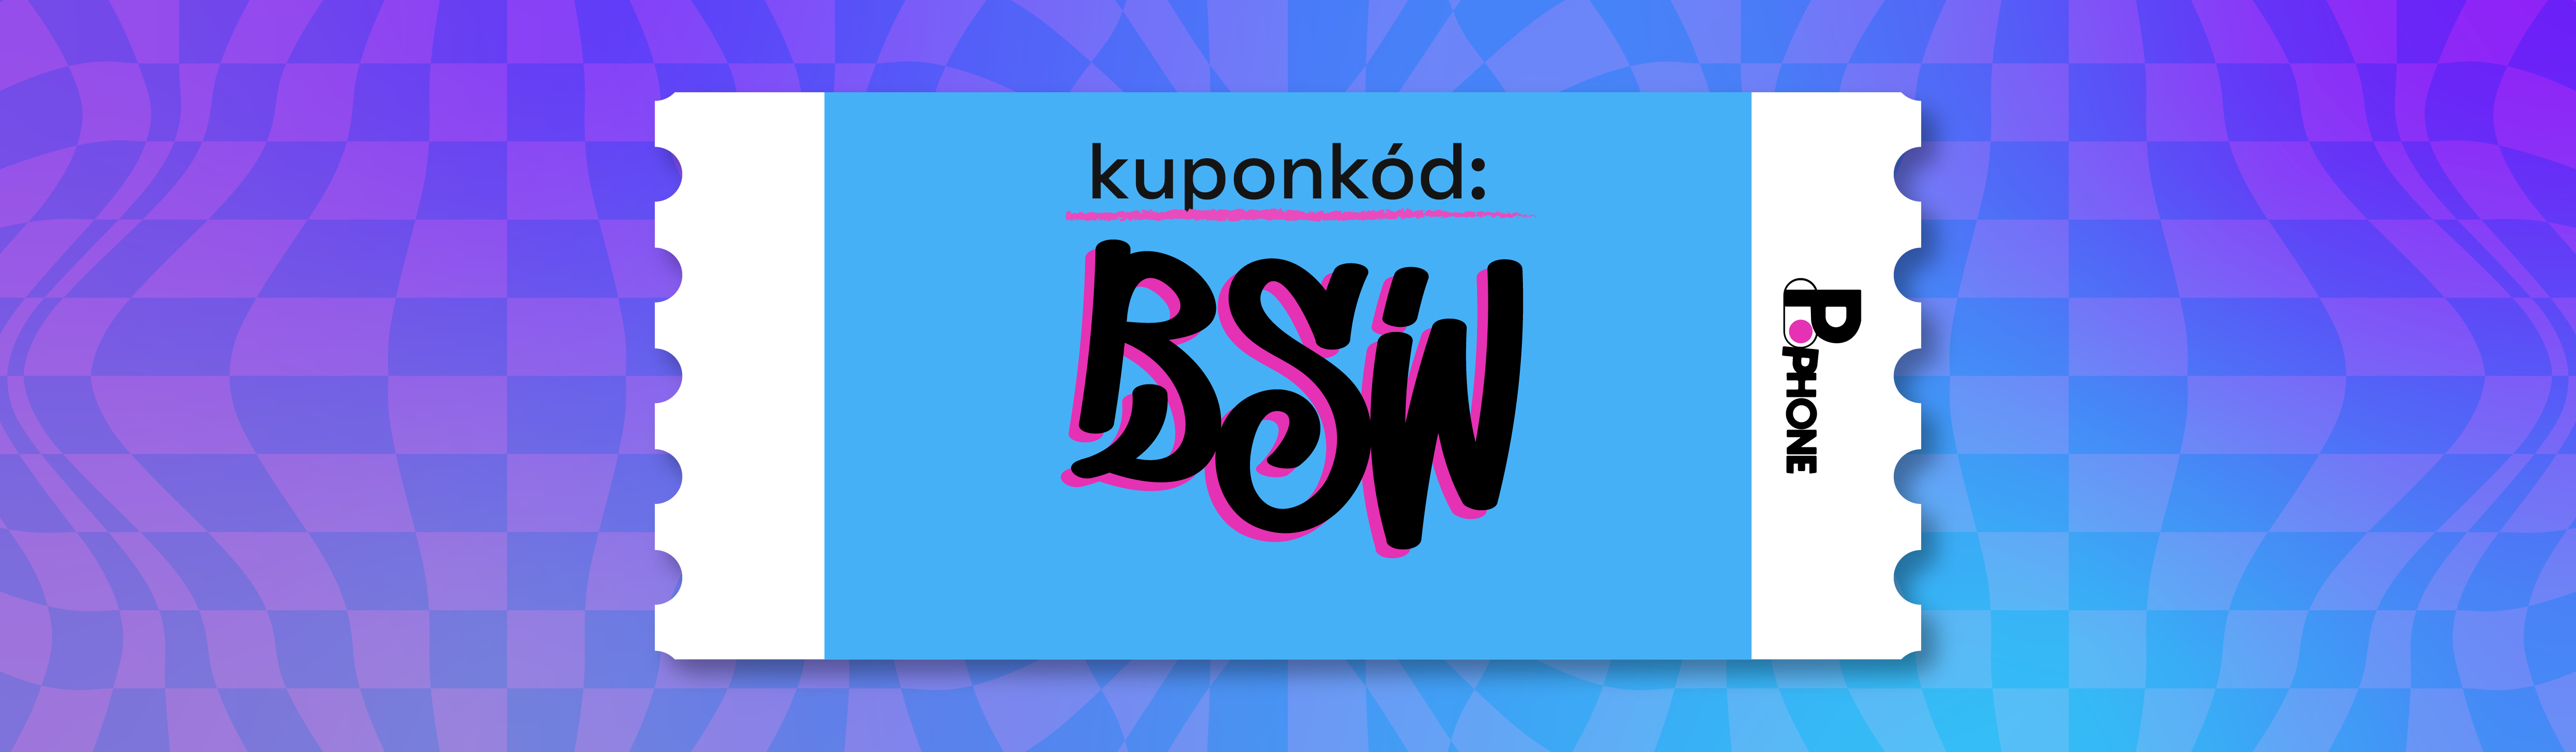 BSW kuponkód - PoPhone